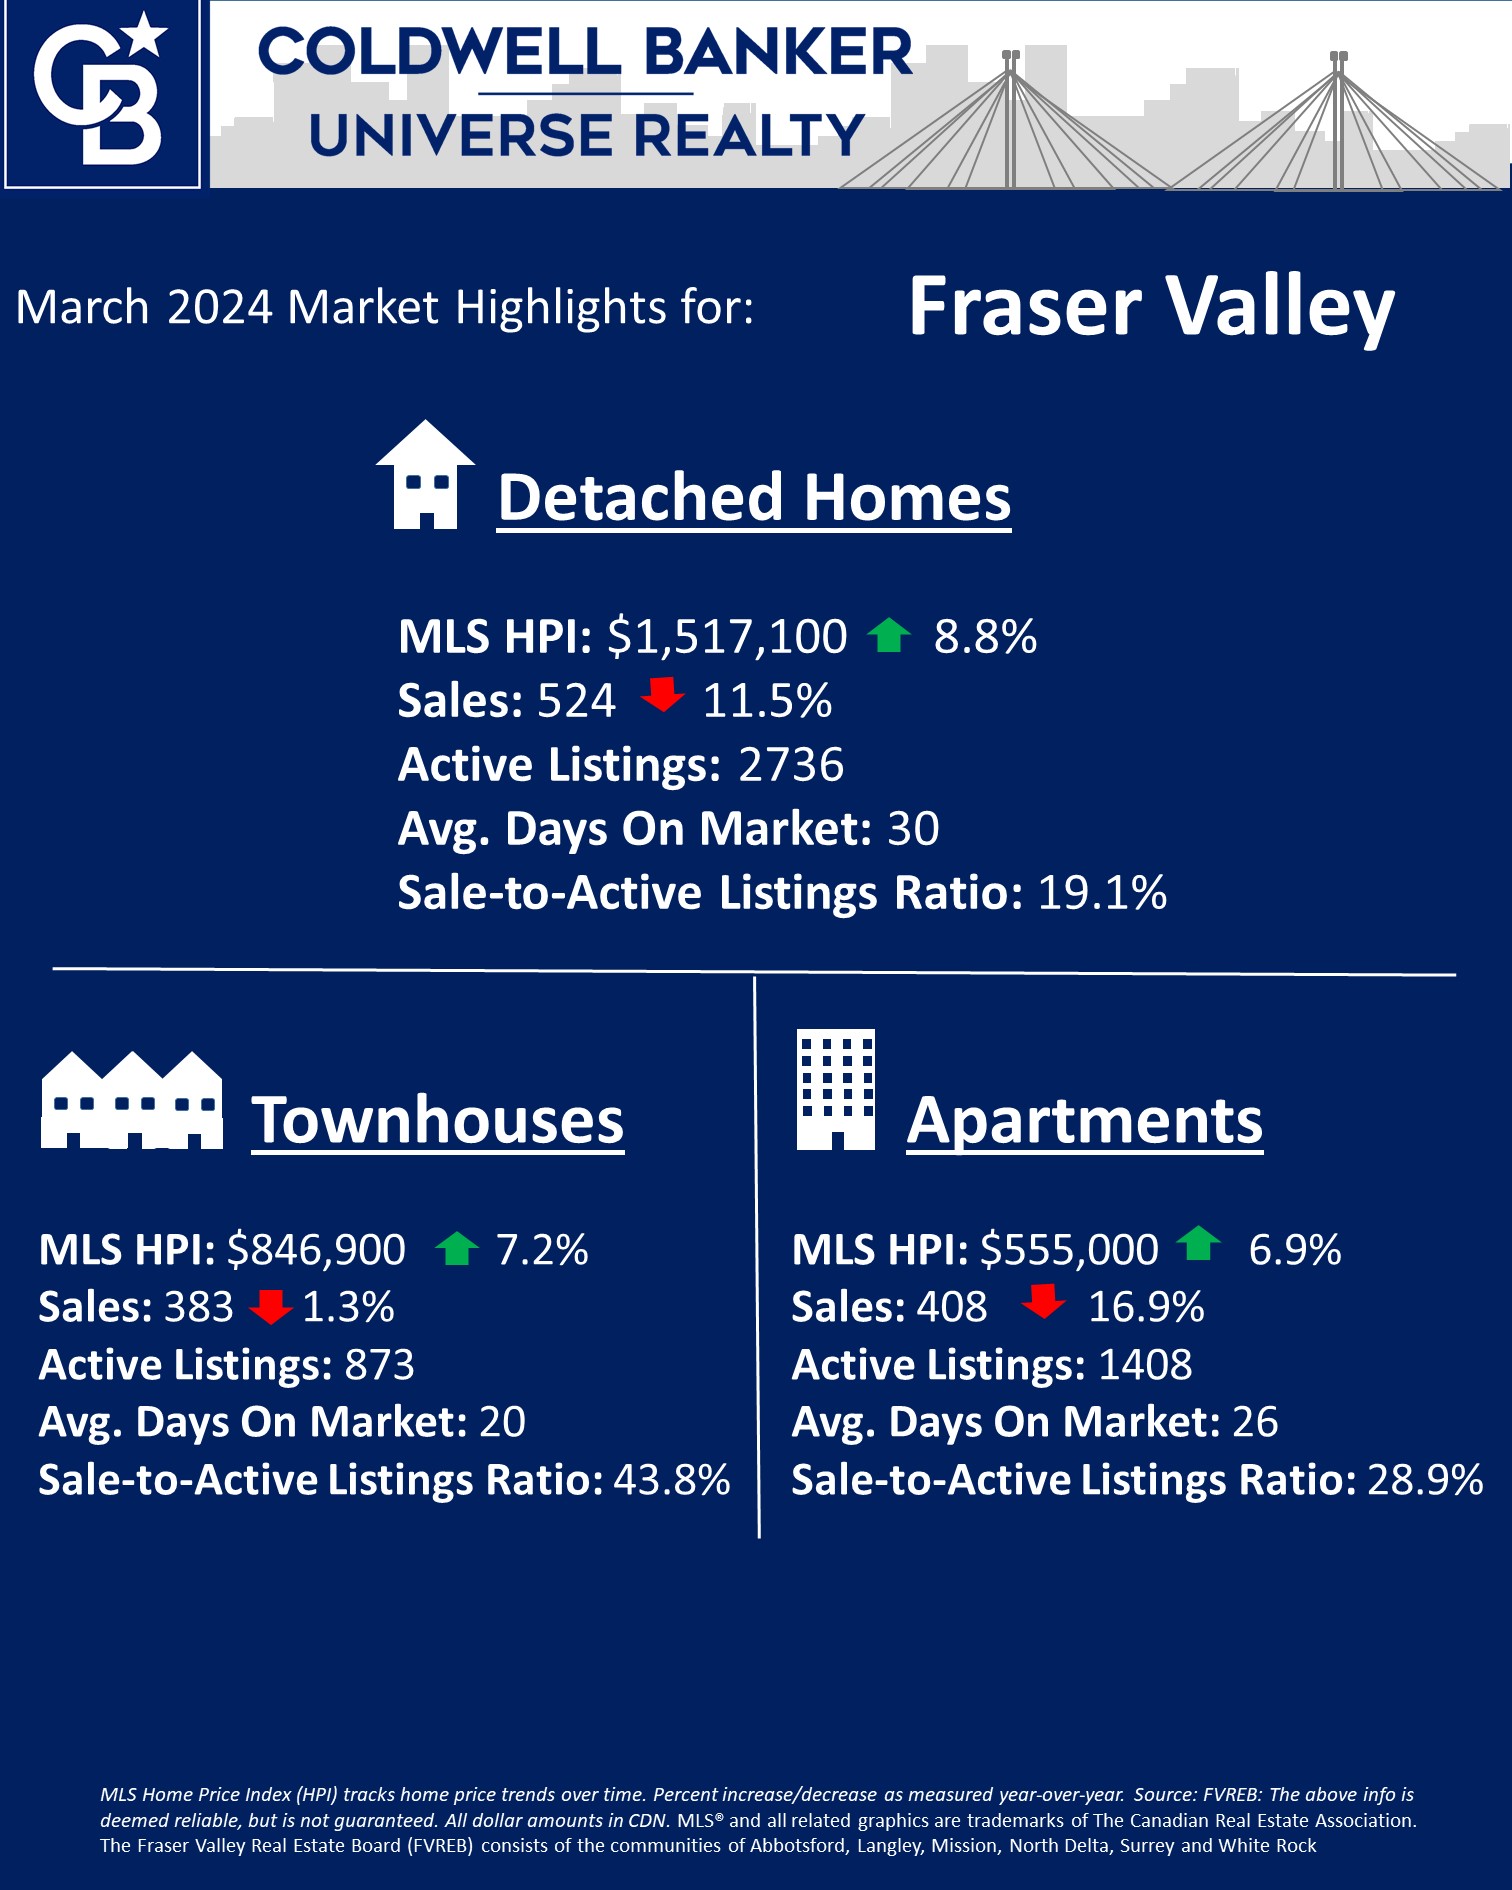 March 2024 Market Update for Fraser Valley